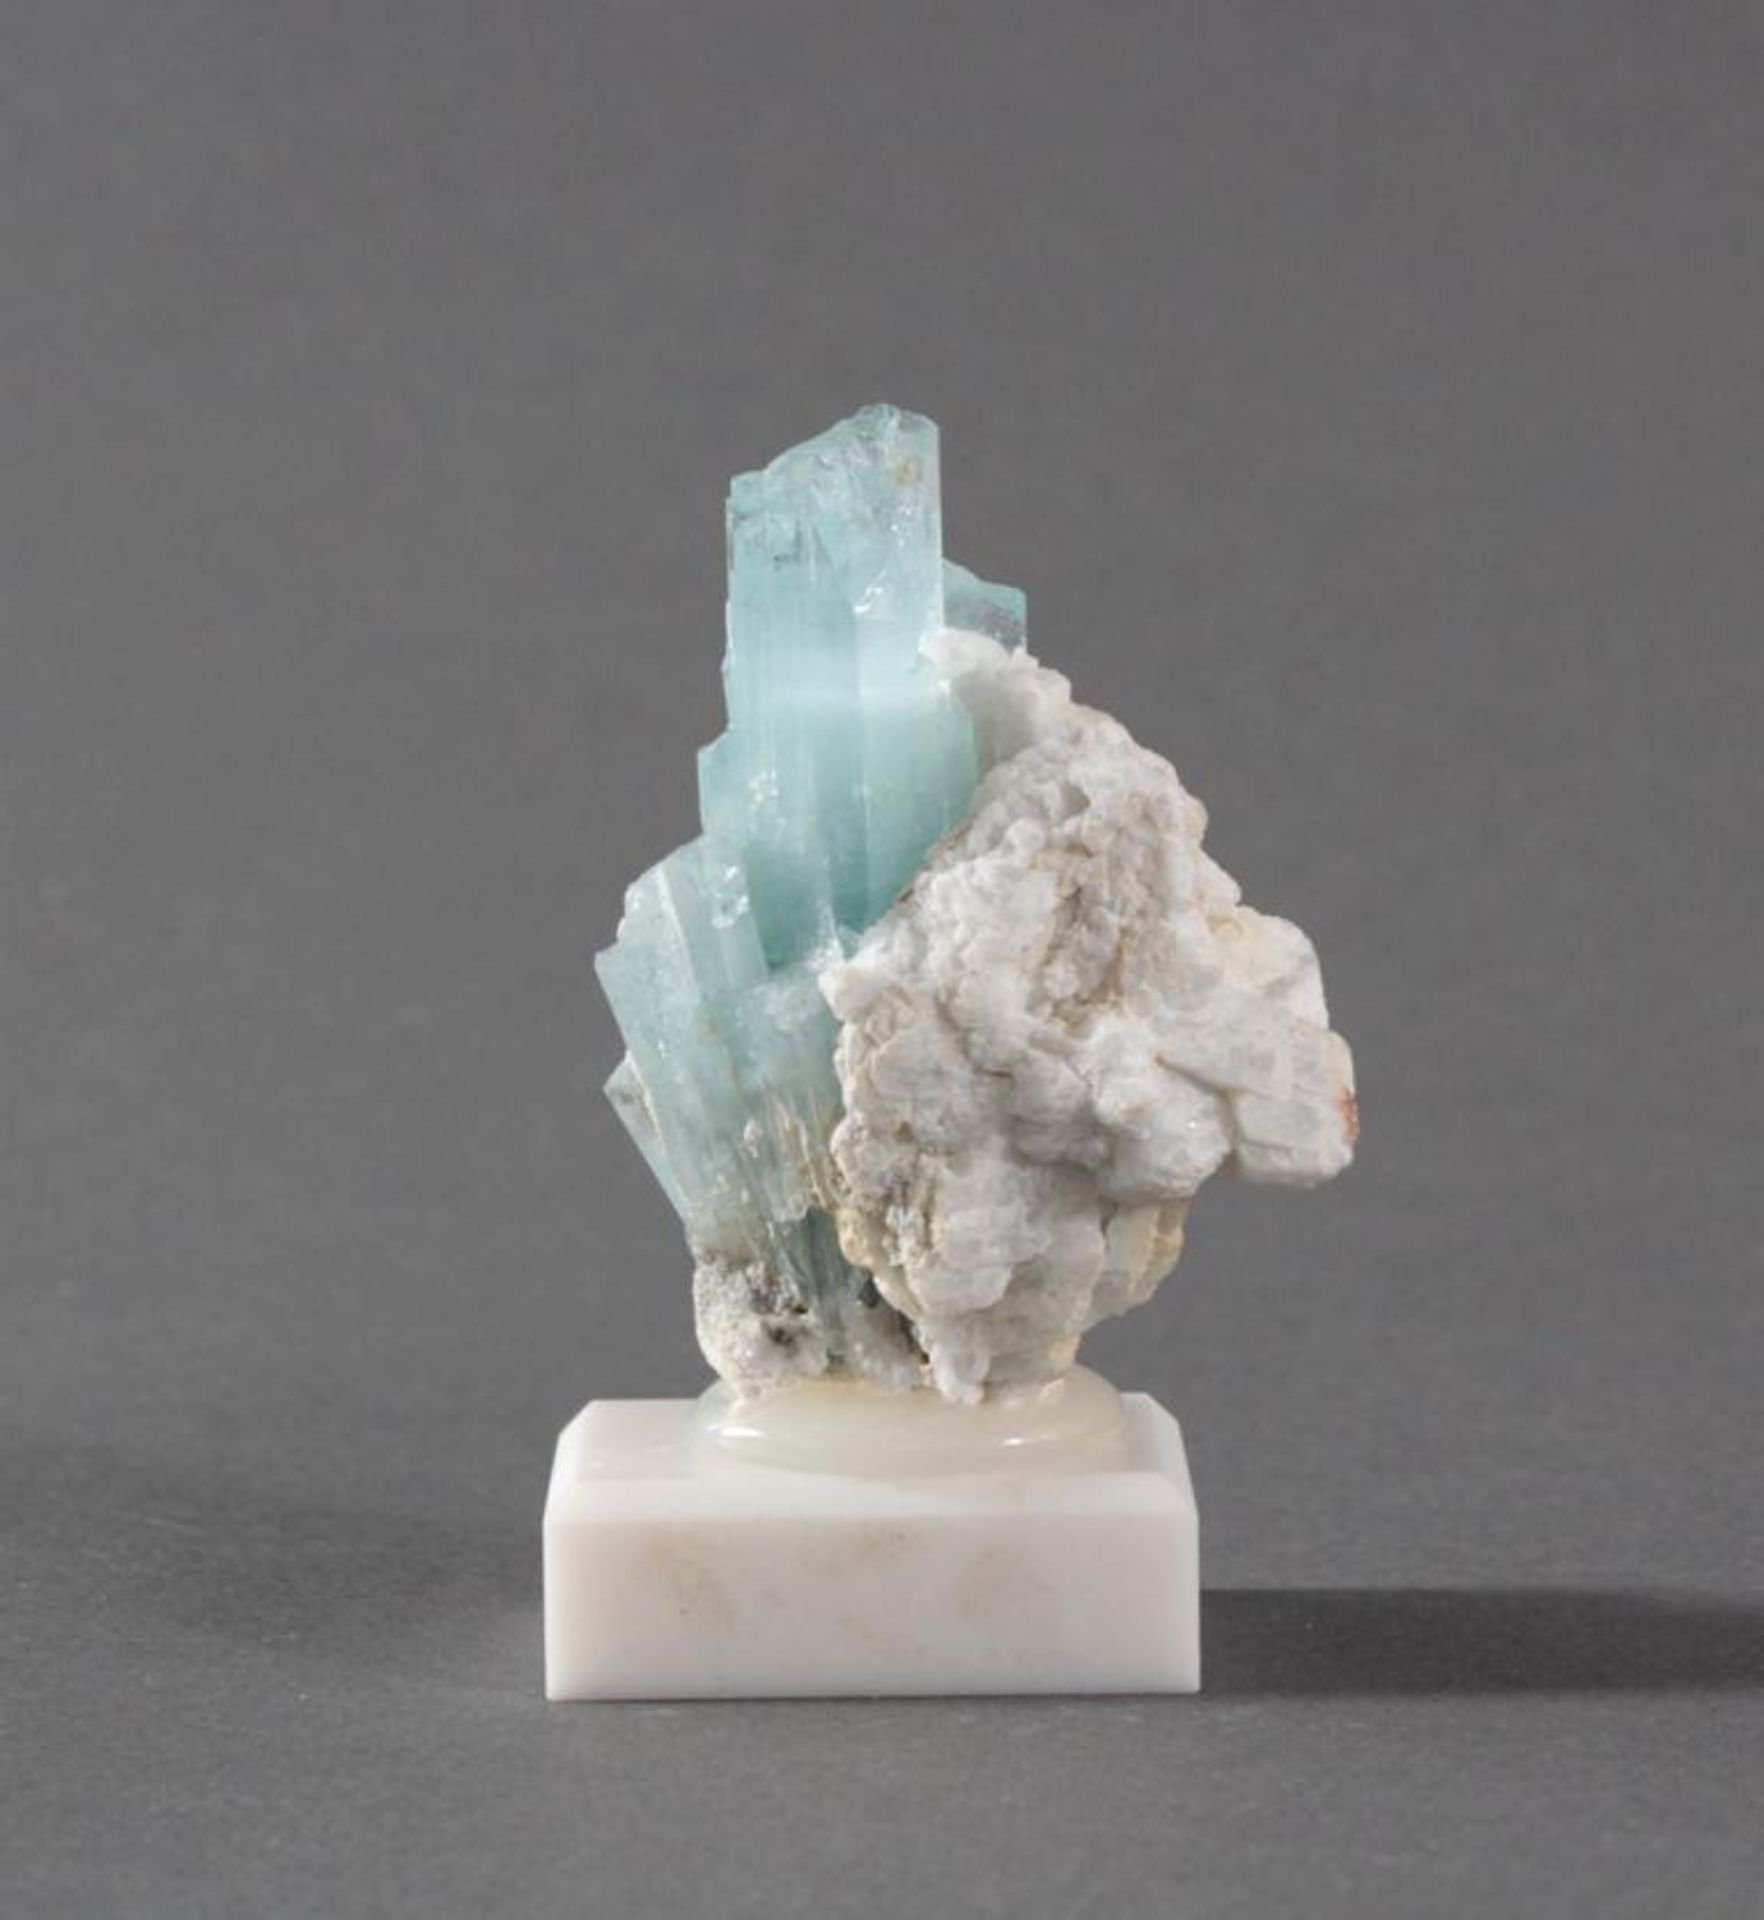 Aquamarin beendeter Crystal, Transparent Sky Blue aus Pakistan68 g, ca. 340 ct. Höhe 6 cm ohne